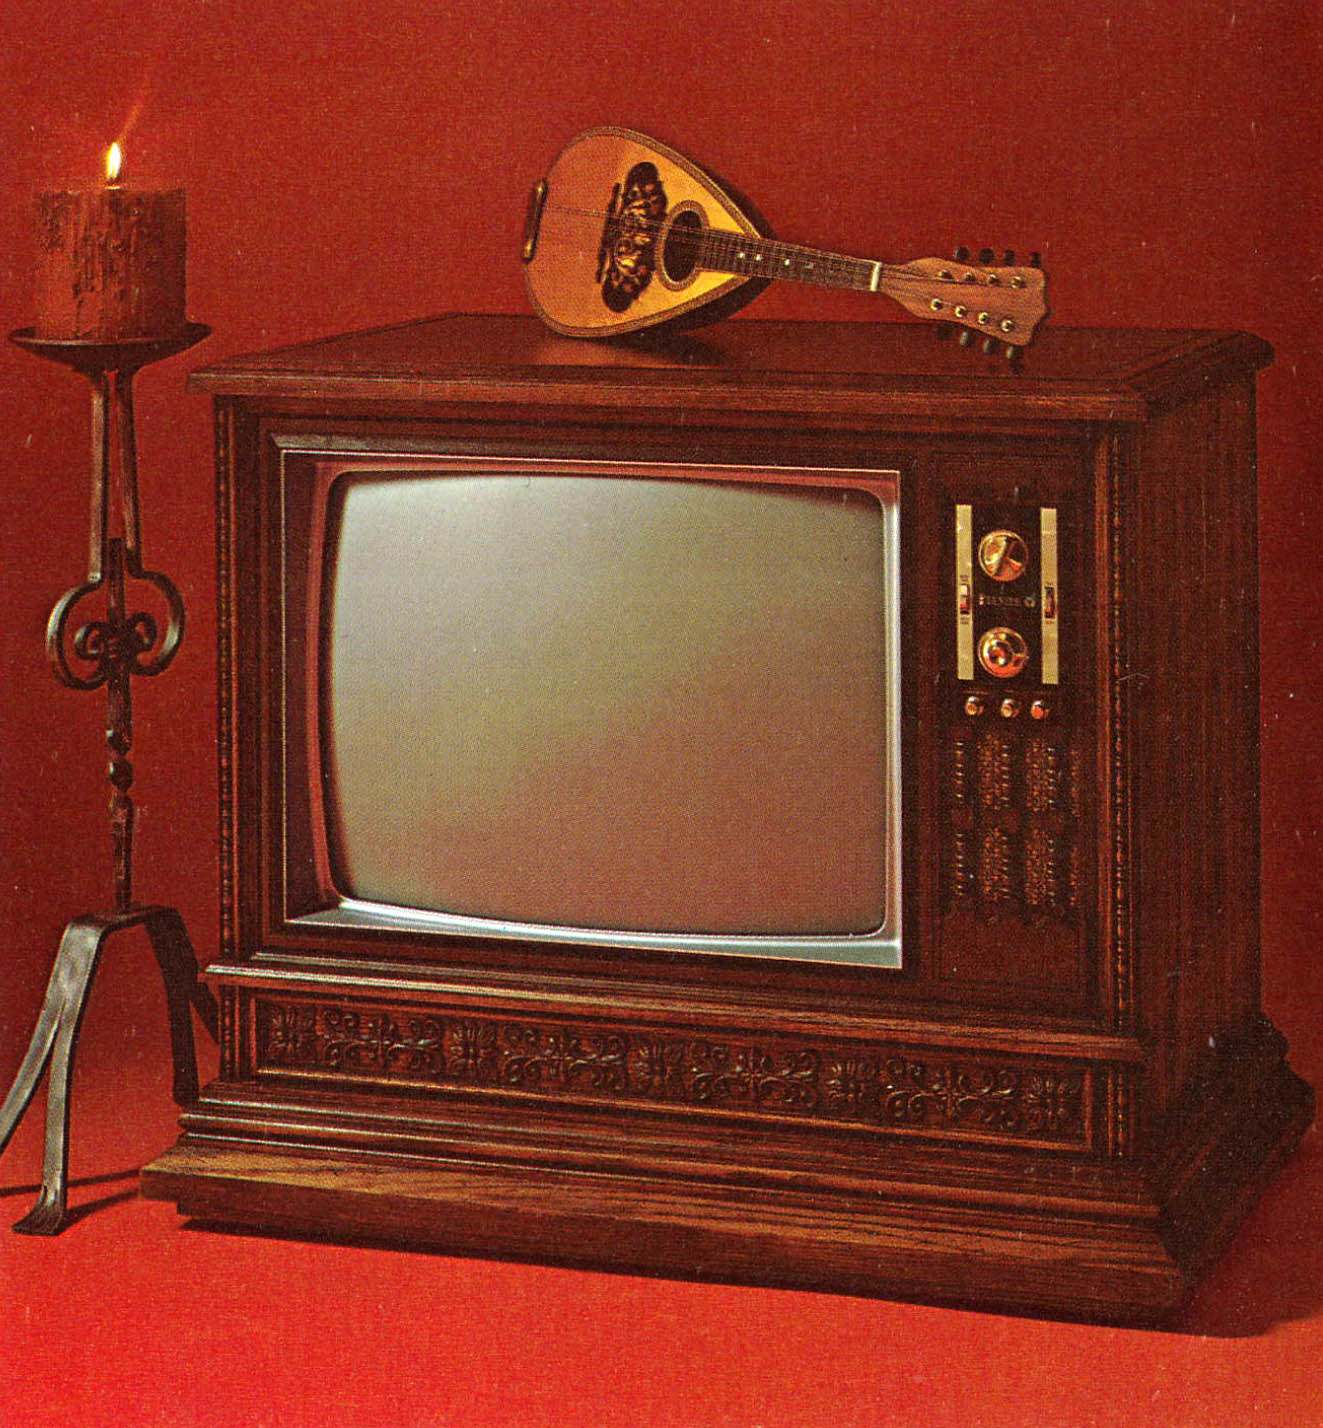 68_1971 Zenith Color TV-20